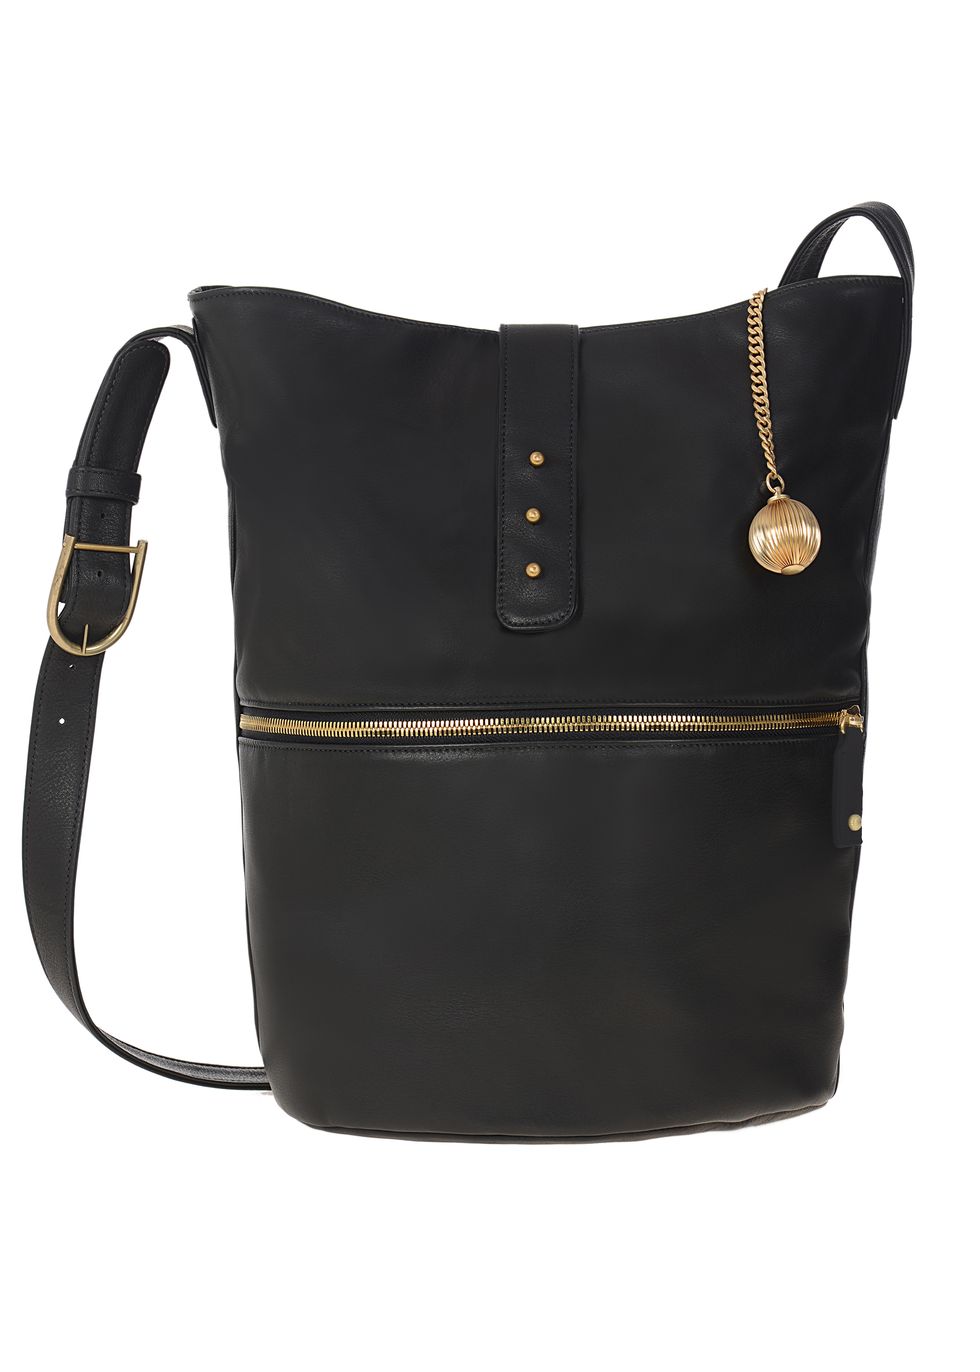 Bag, Handbag, Shoulder bag, Leather, Fashion accessory, Diaper bag, Luggage and bags, Buckle, Strap, Satchel, 